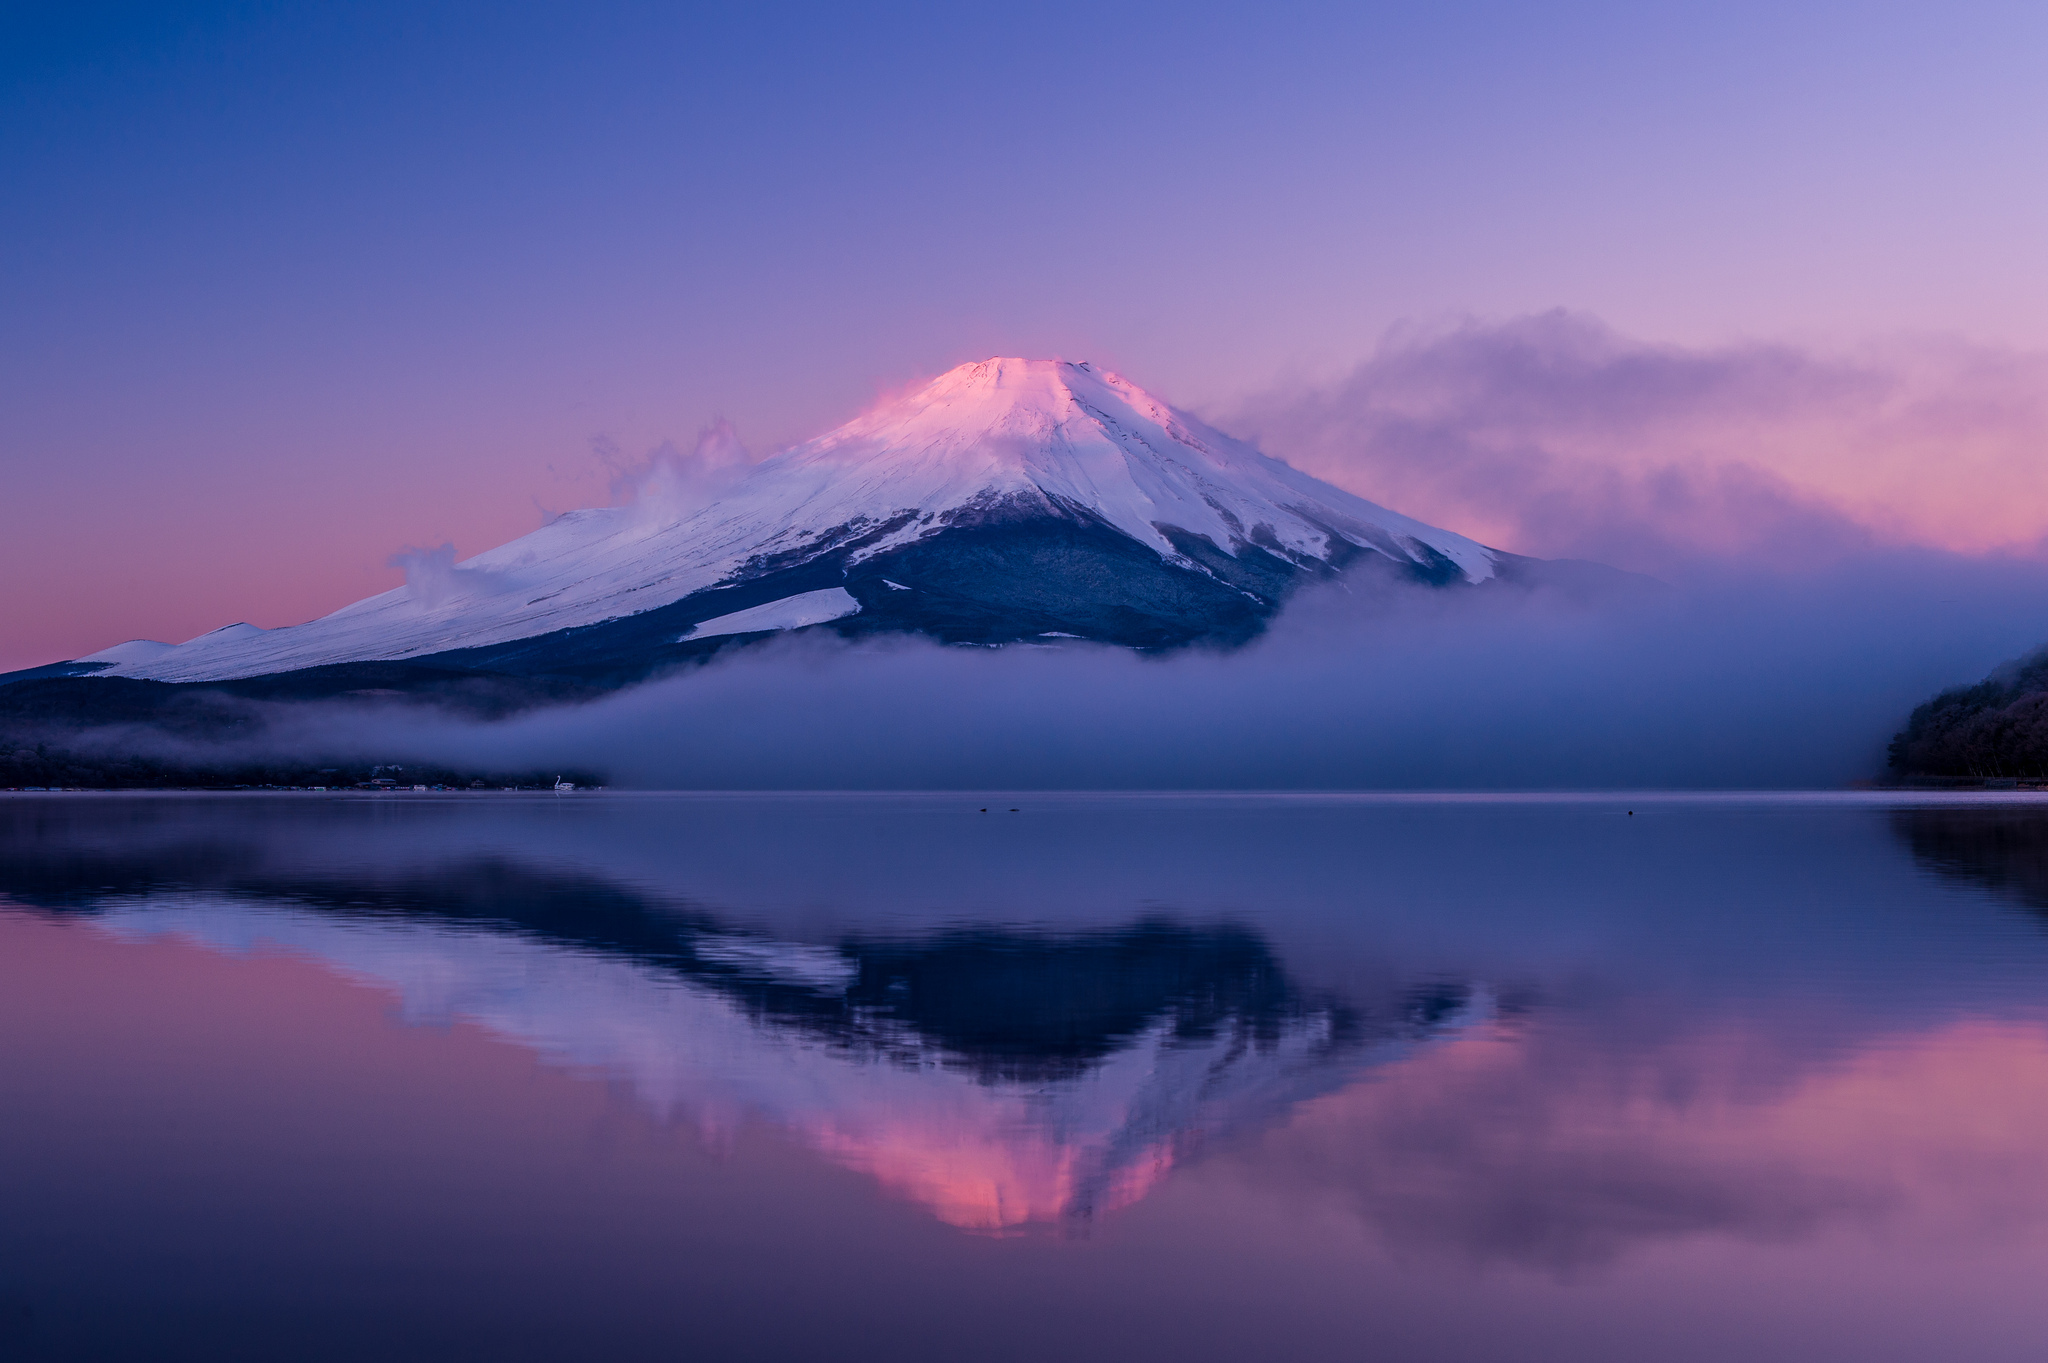 356071 Bild herunterladen lila, erde/natur, fujisan, nebel, japan, spiegelung, gipfel, vulkan, vulkane - Hintergrundbilder und Bildschirmschoner kostenlos